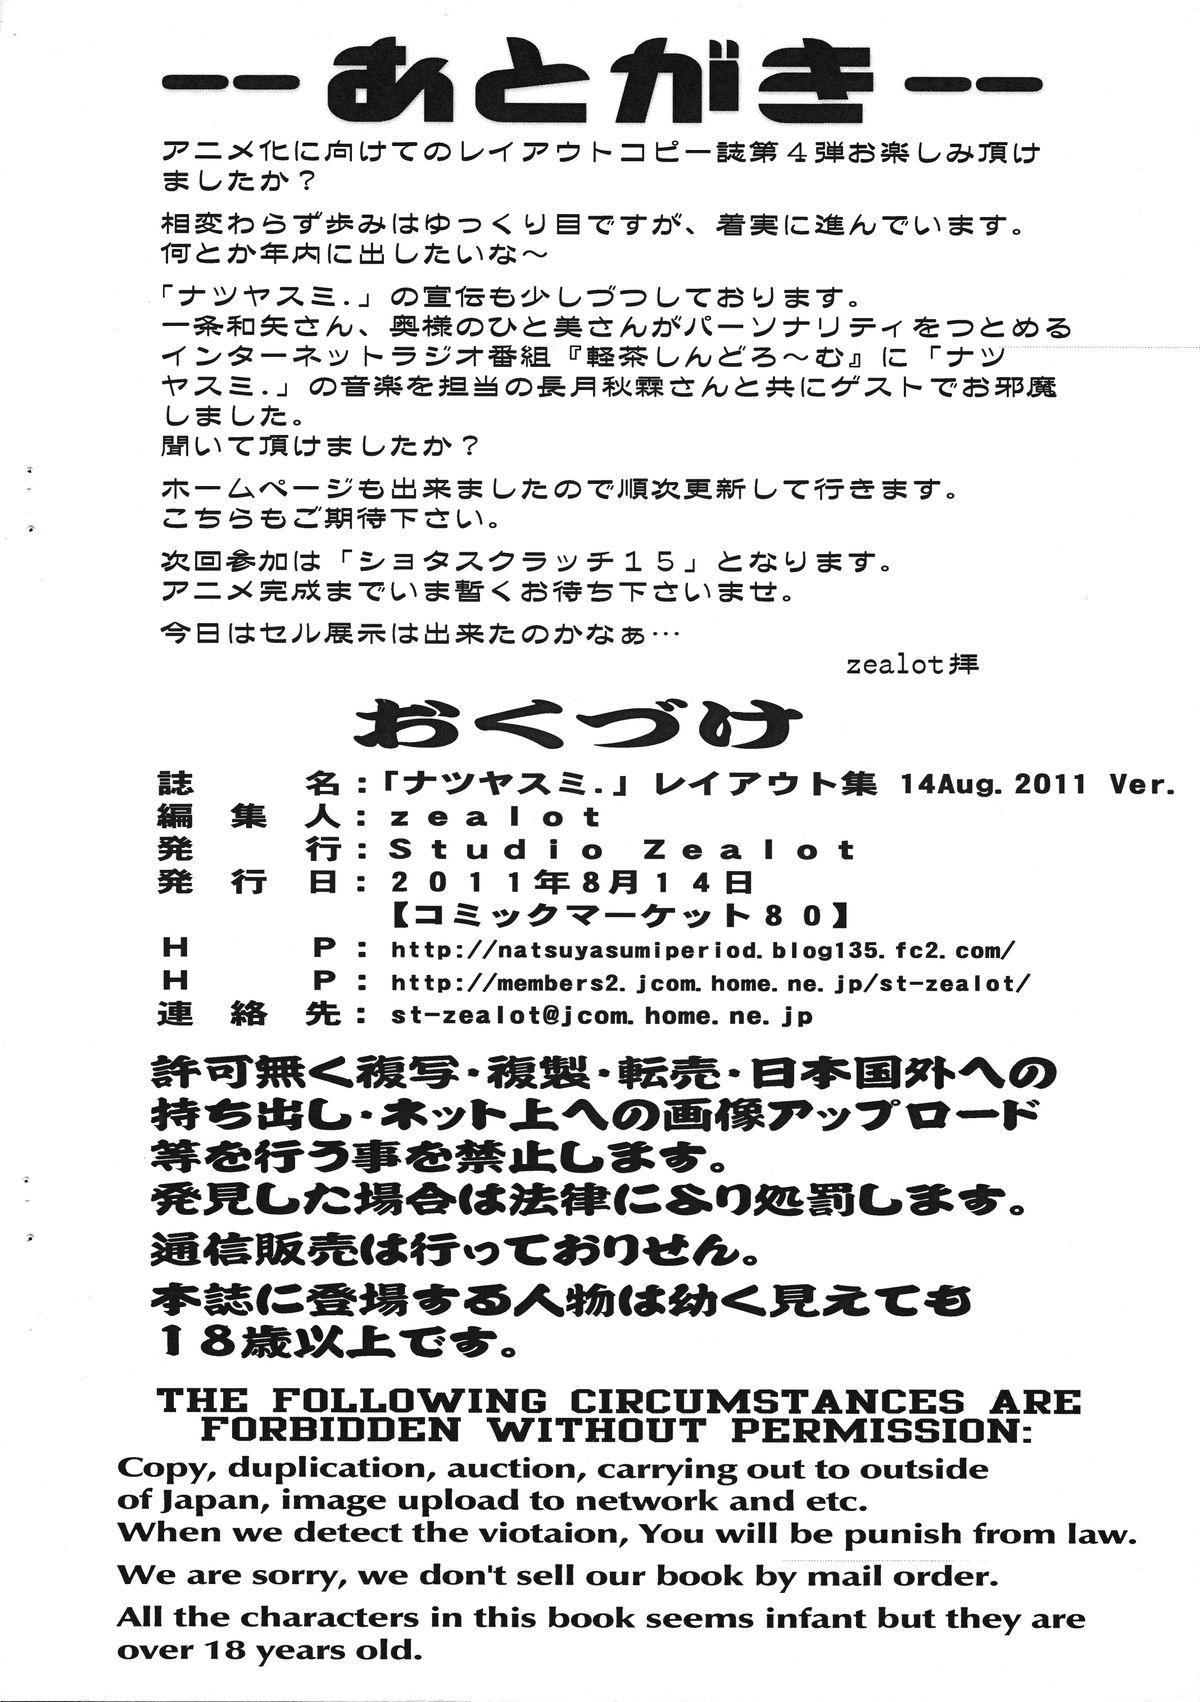 Freeteenporn Natsuyasumi Period Layout Shuu 14 Aug. 2011 Ver. Naughty - Page 11